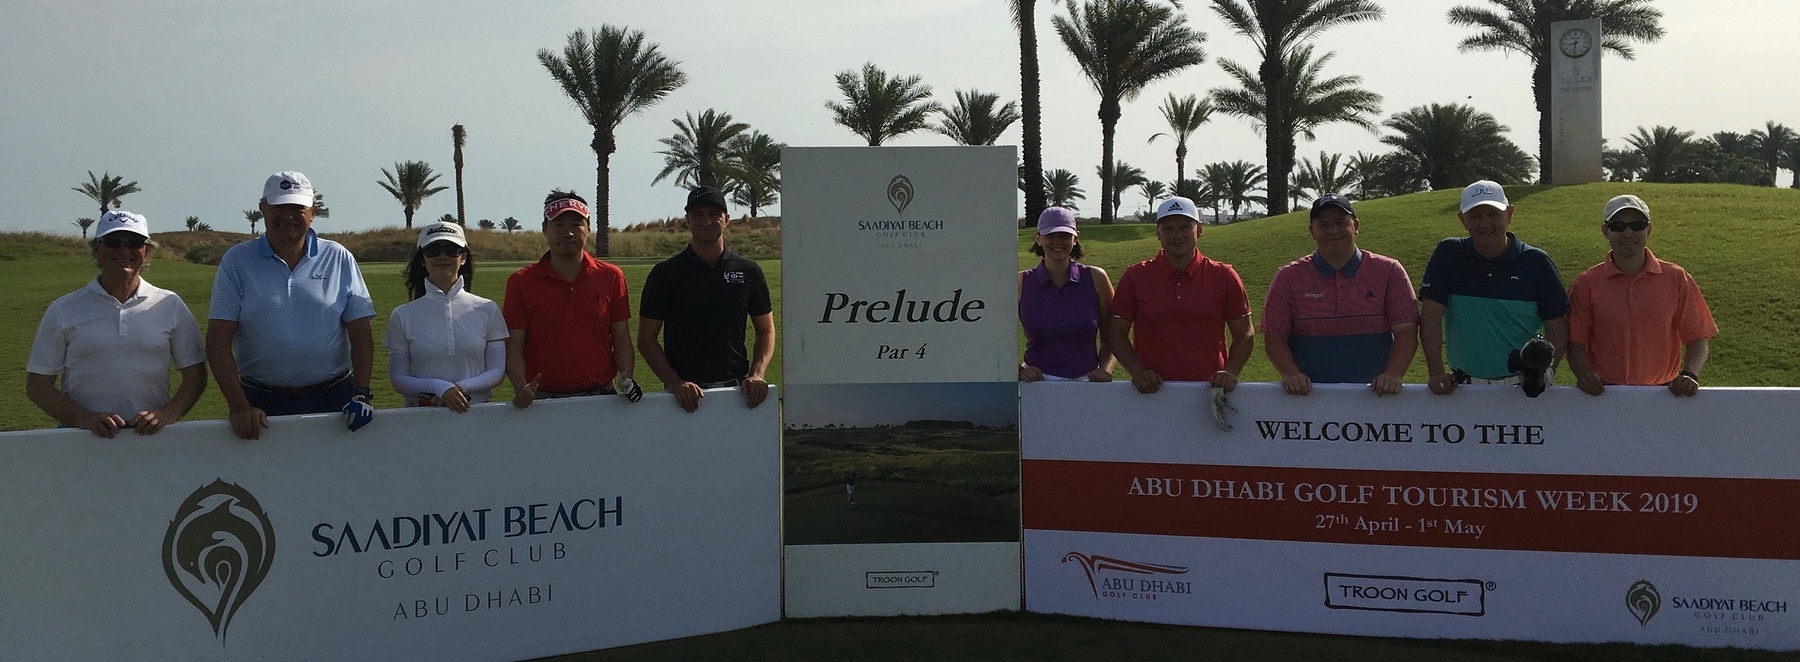 Abu Dhabi Golf Tourism Week attendees at Saadiyat Beach Golf Club (1)